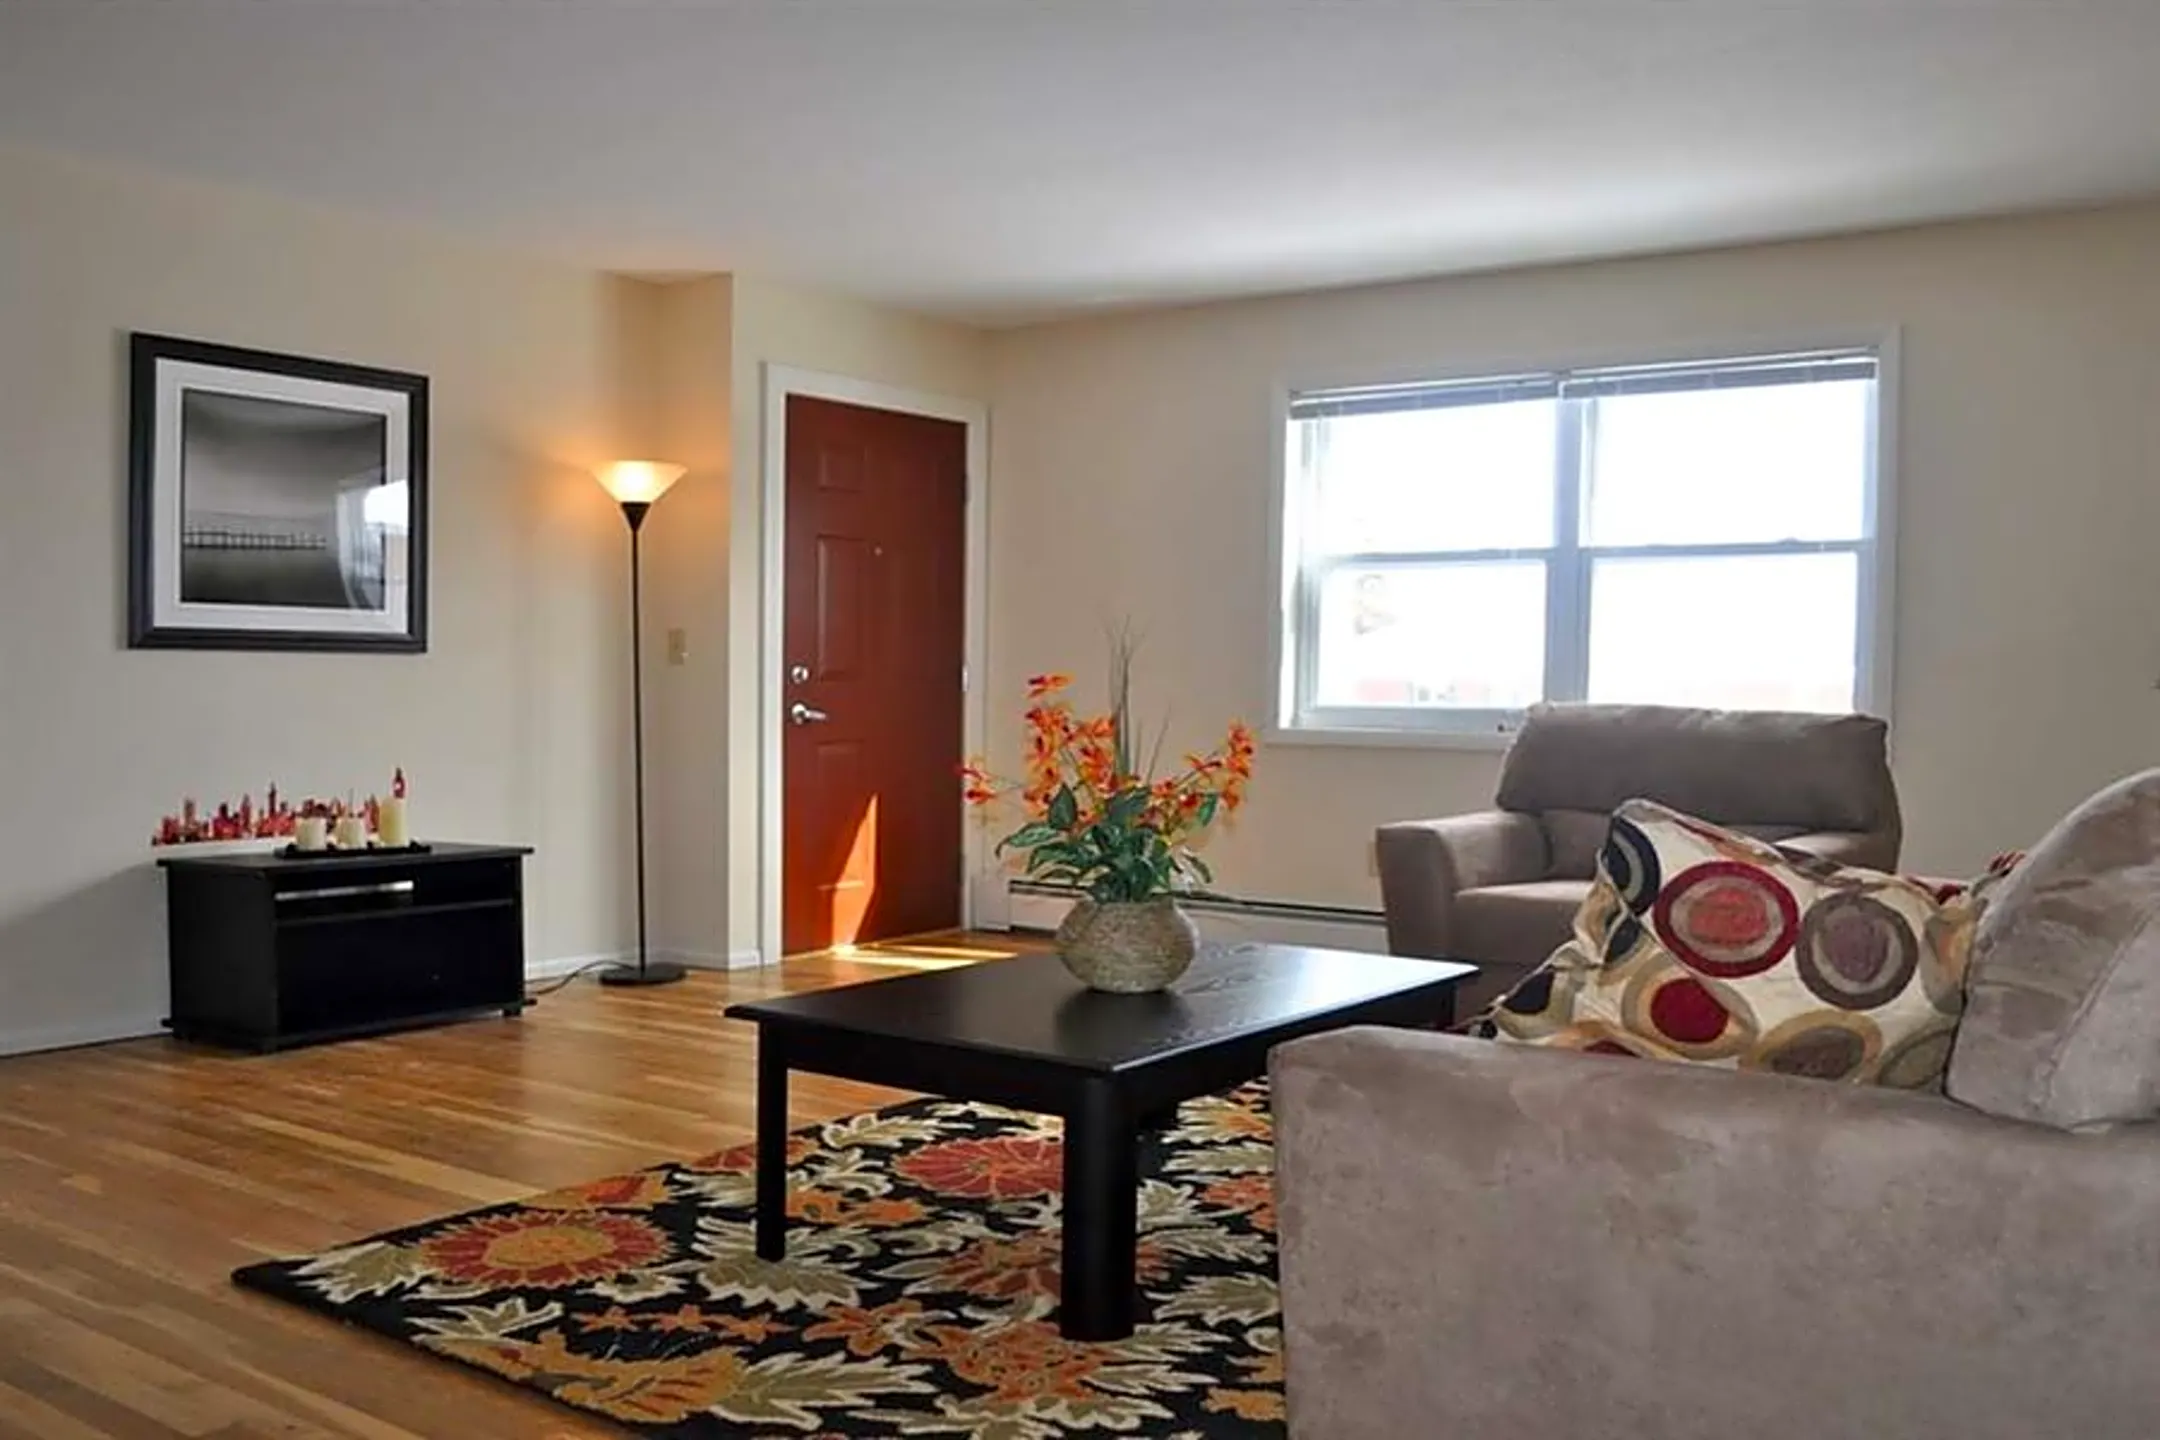 Laurel Ridge Apartments - Northampton, MA